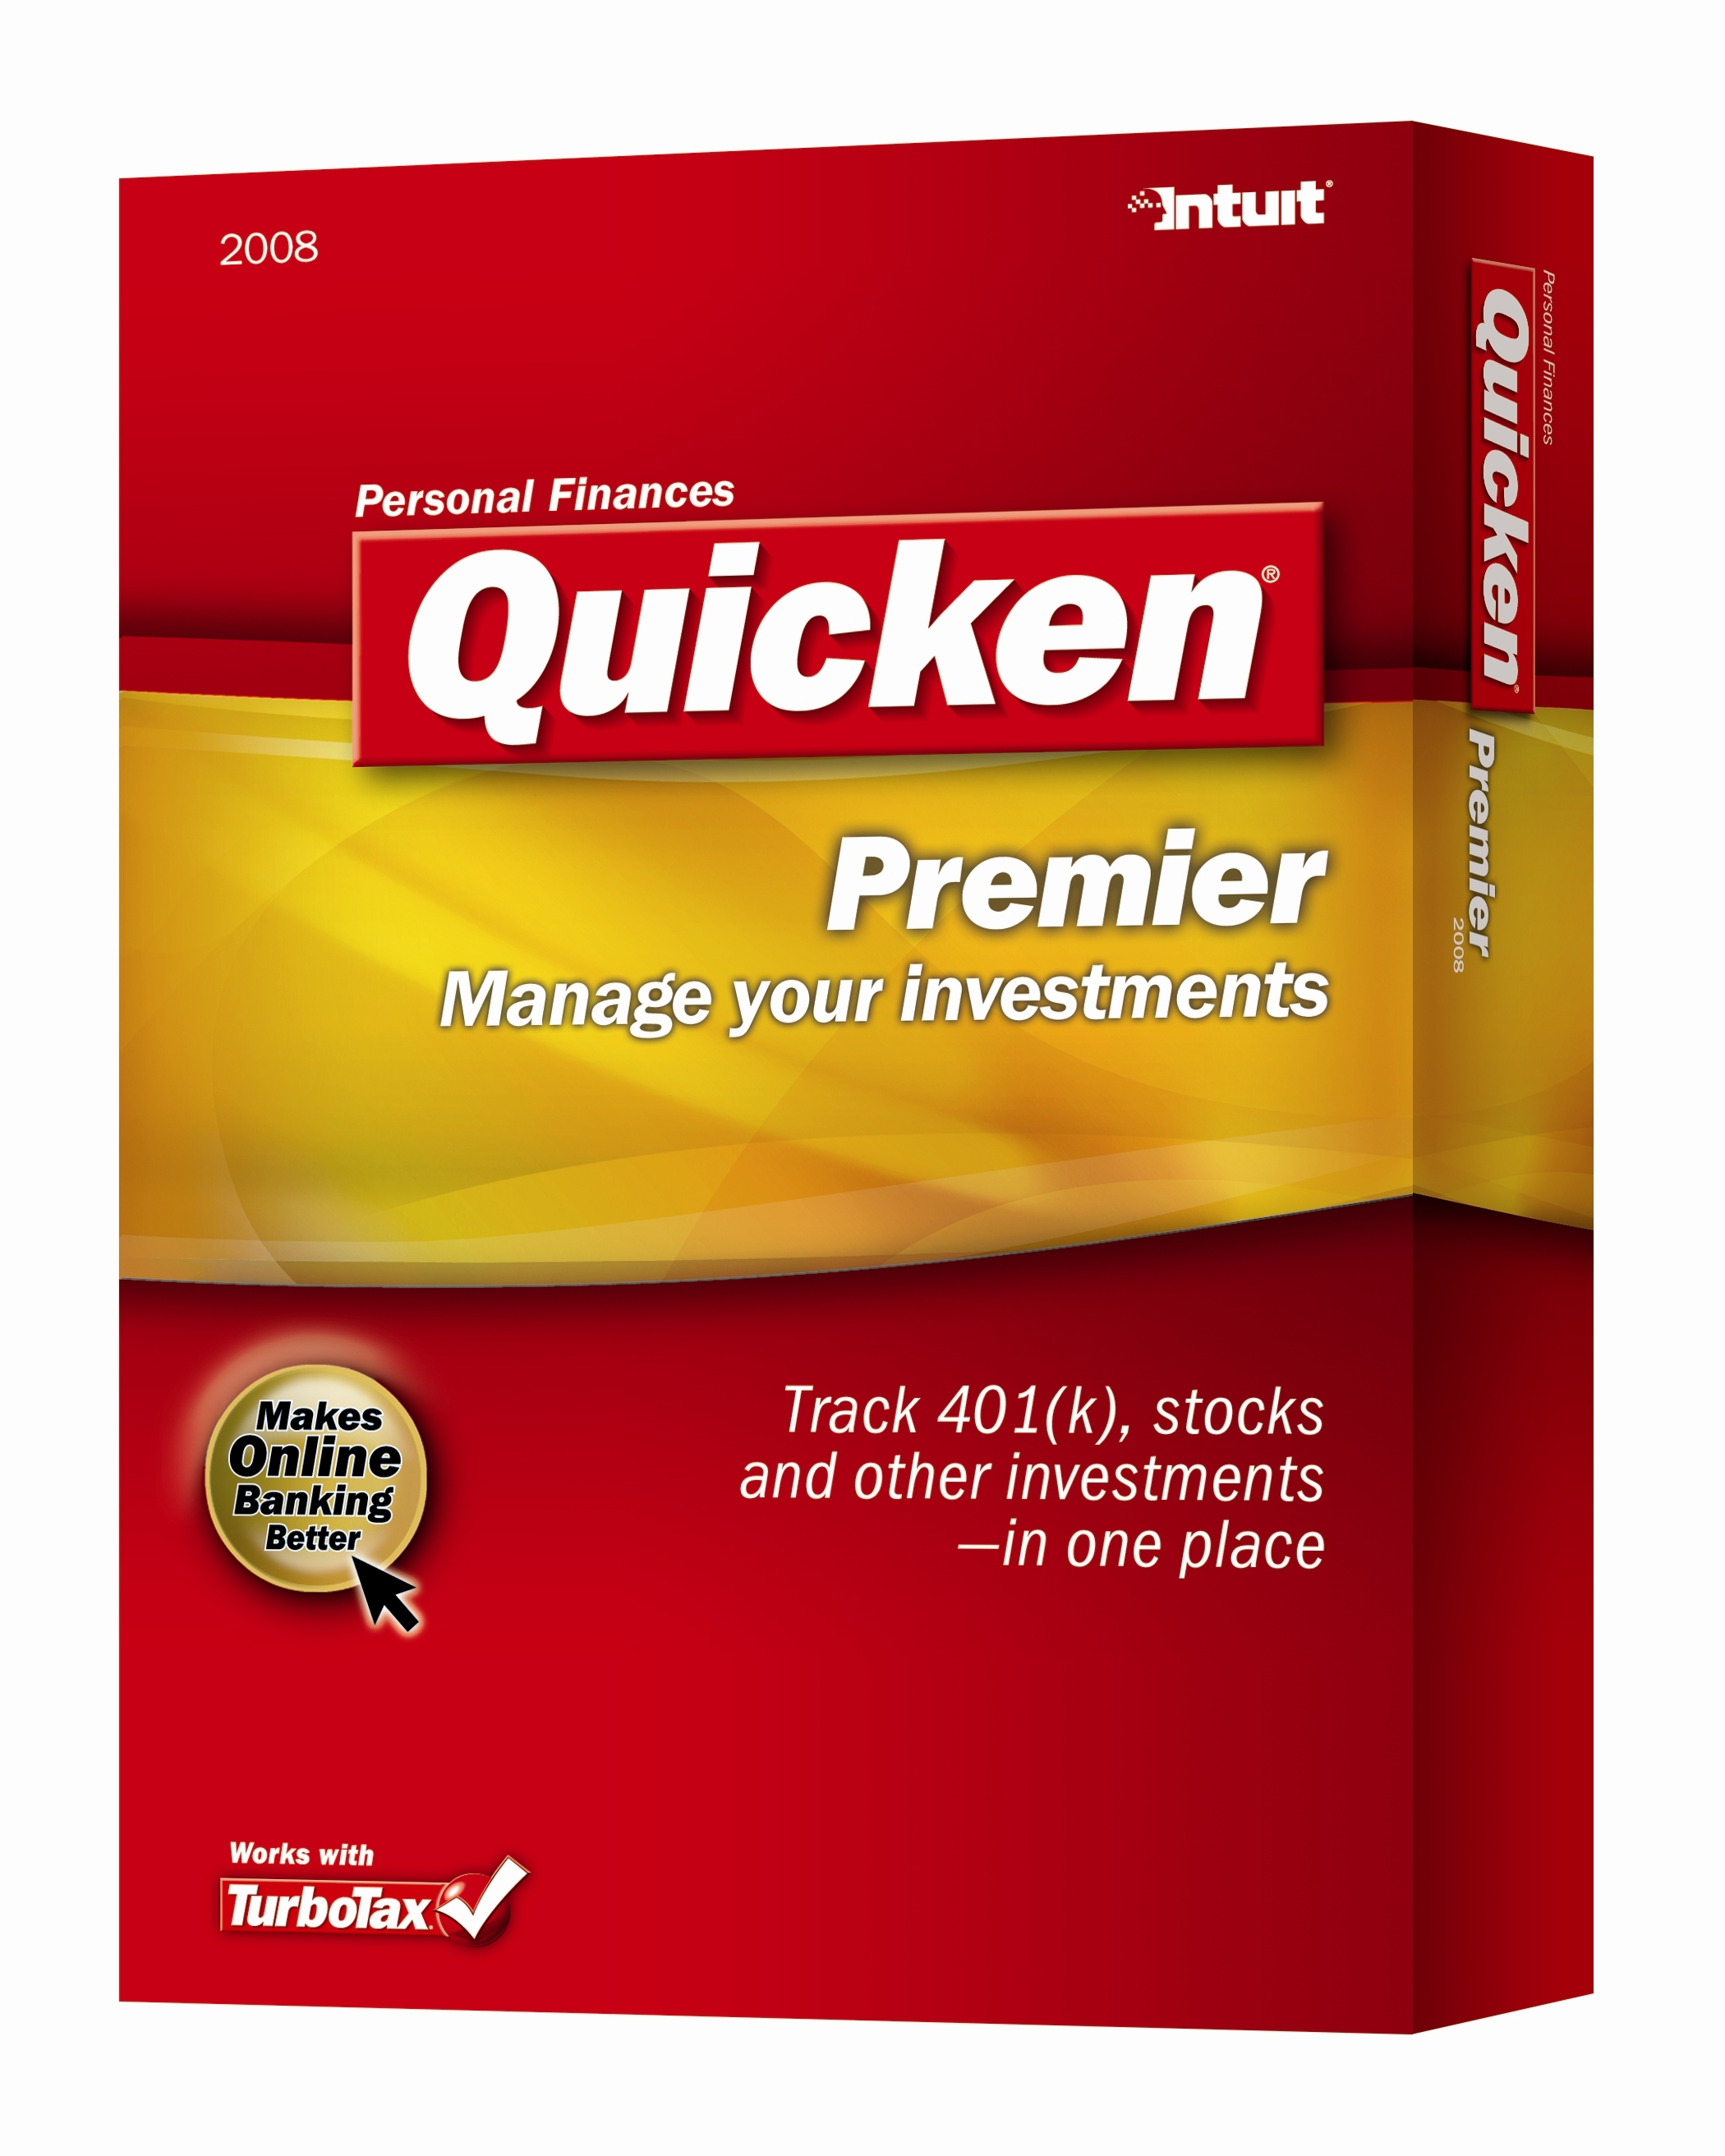 install quicken 2015 on new computer